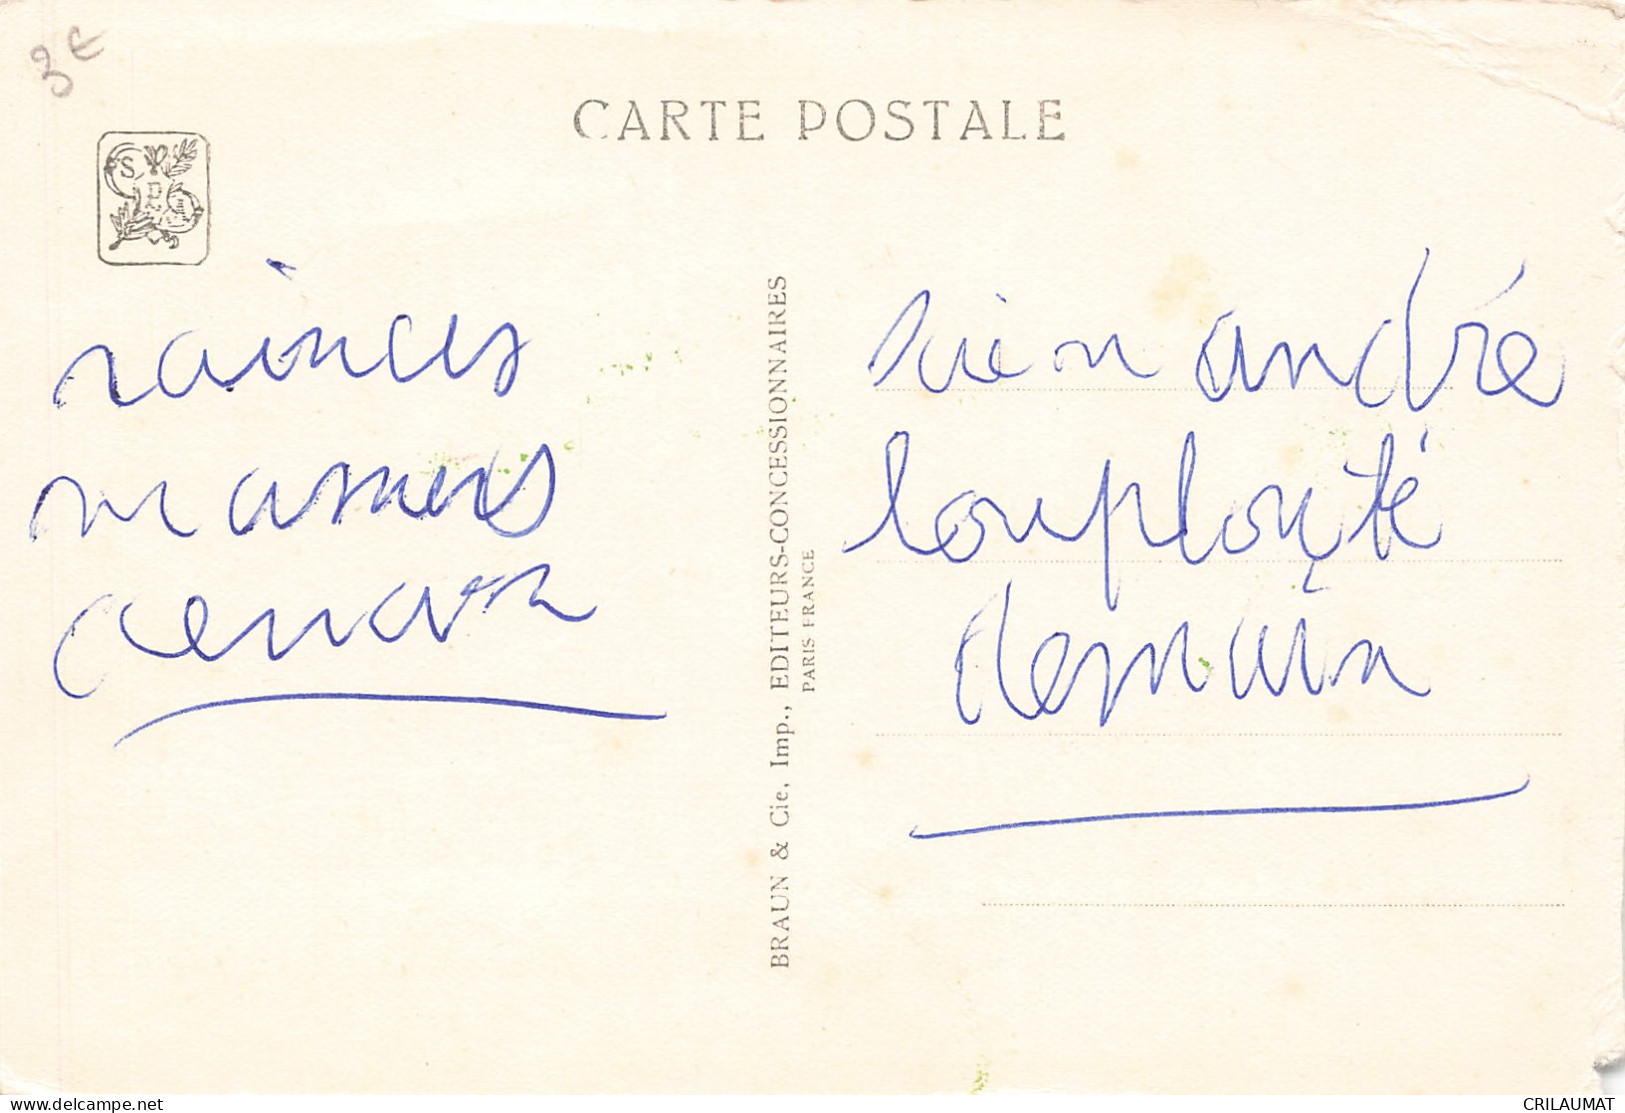 75-PARIS-EXPOSITION COLONIALE INTERNATIONALE 1931 ANGKOR VAT-N°T5308-H/0289 - Expositions